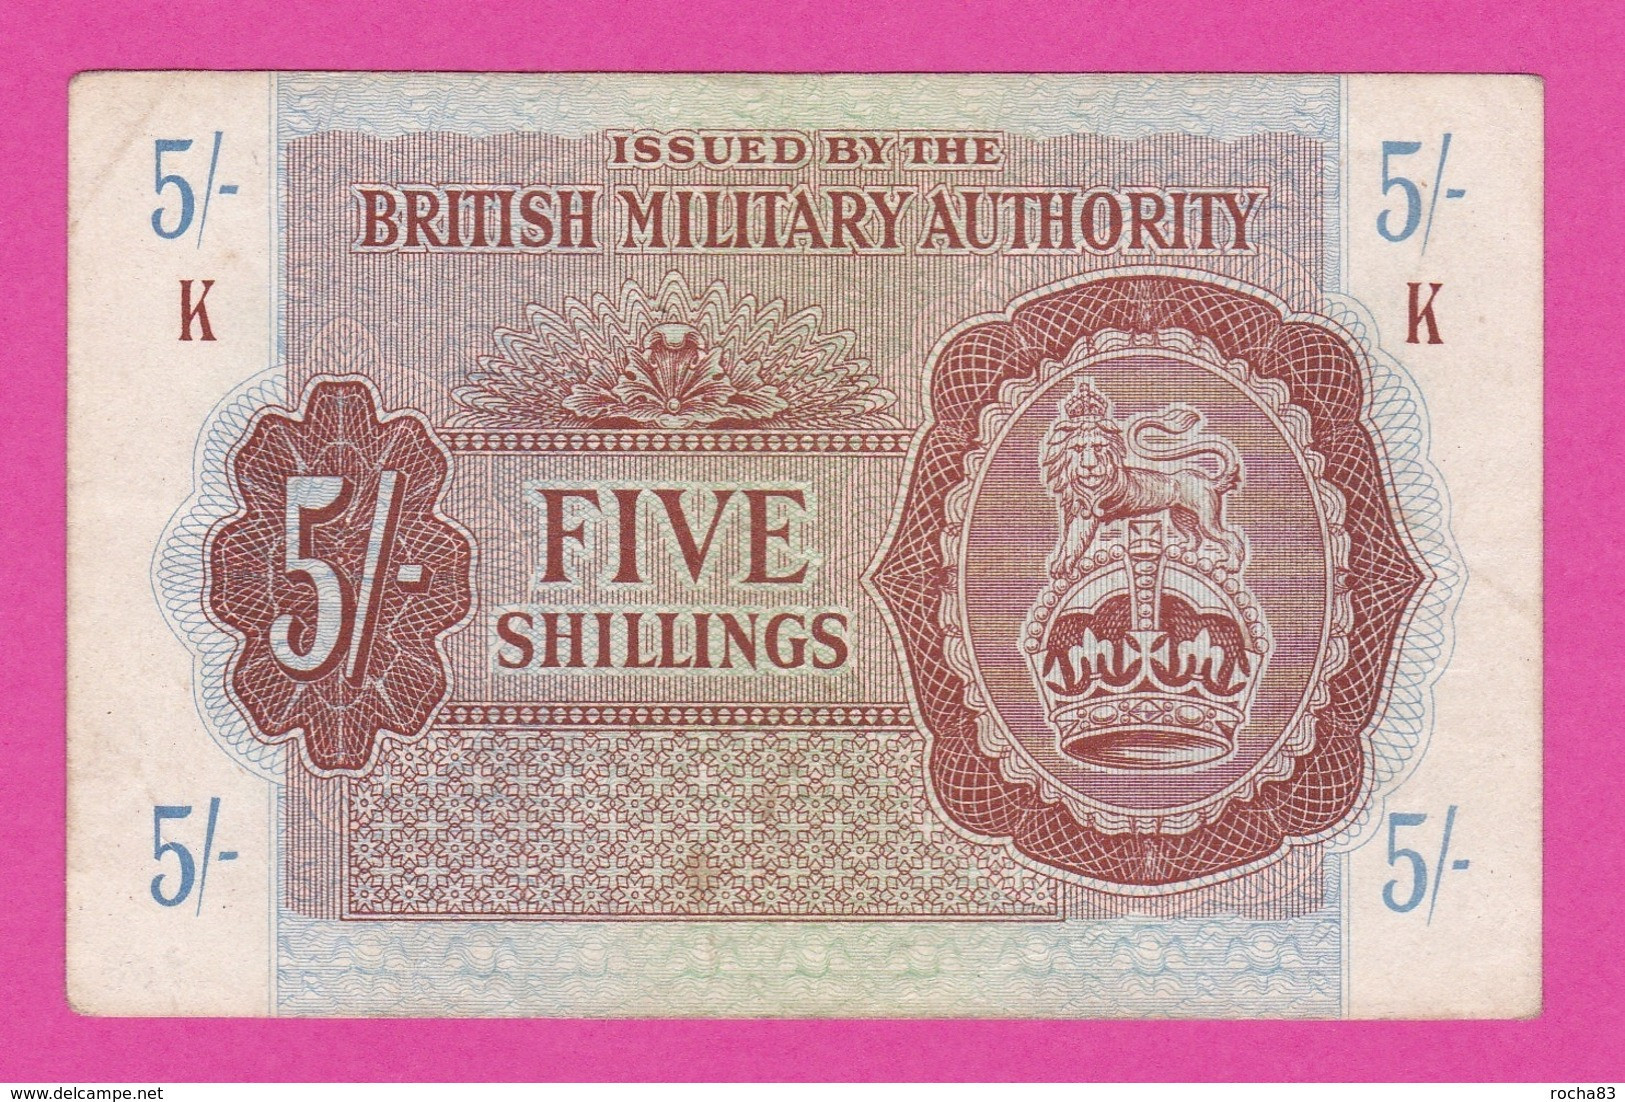 Billet ROYAUME UNI - Military Authority  5 Shillings  1943 -  Pick M 4 - British Military Authority